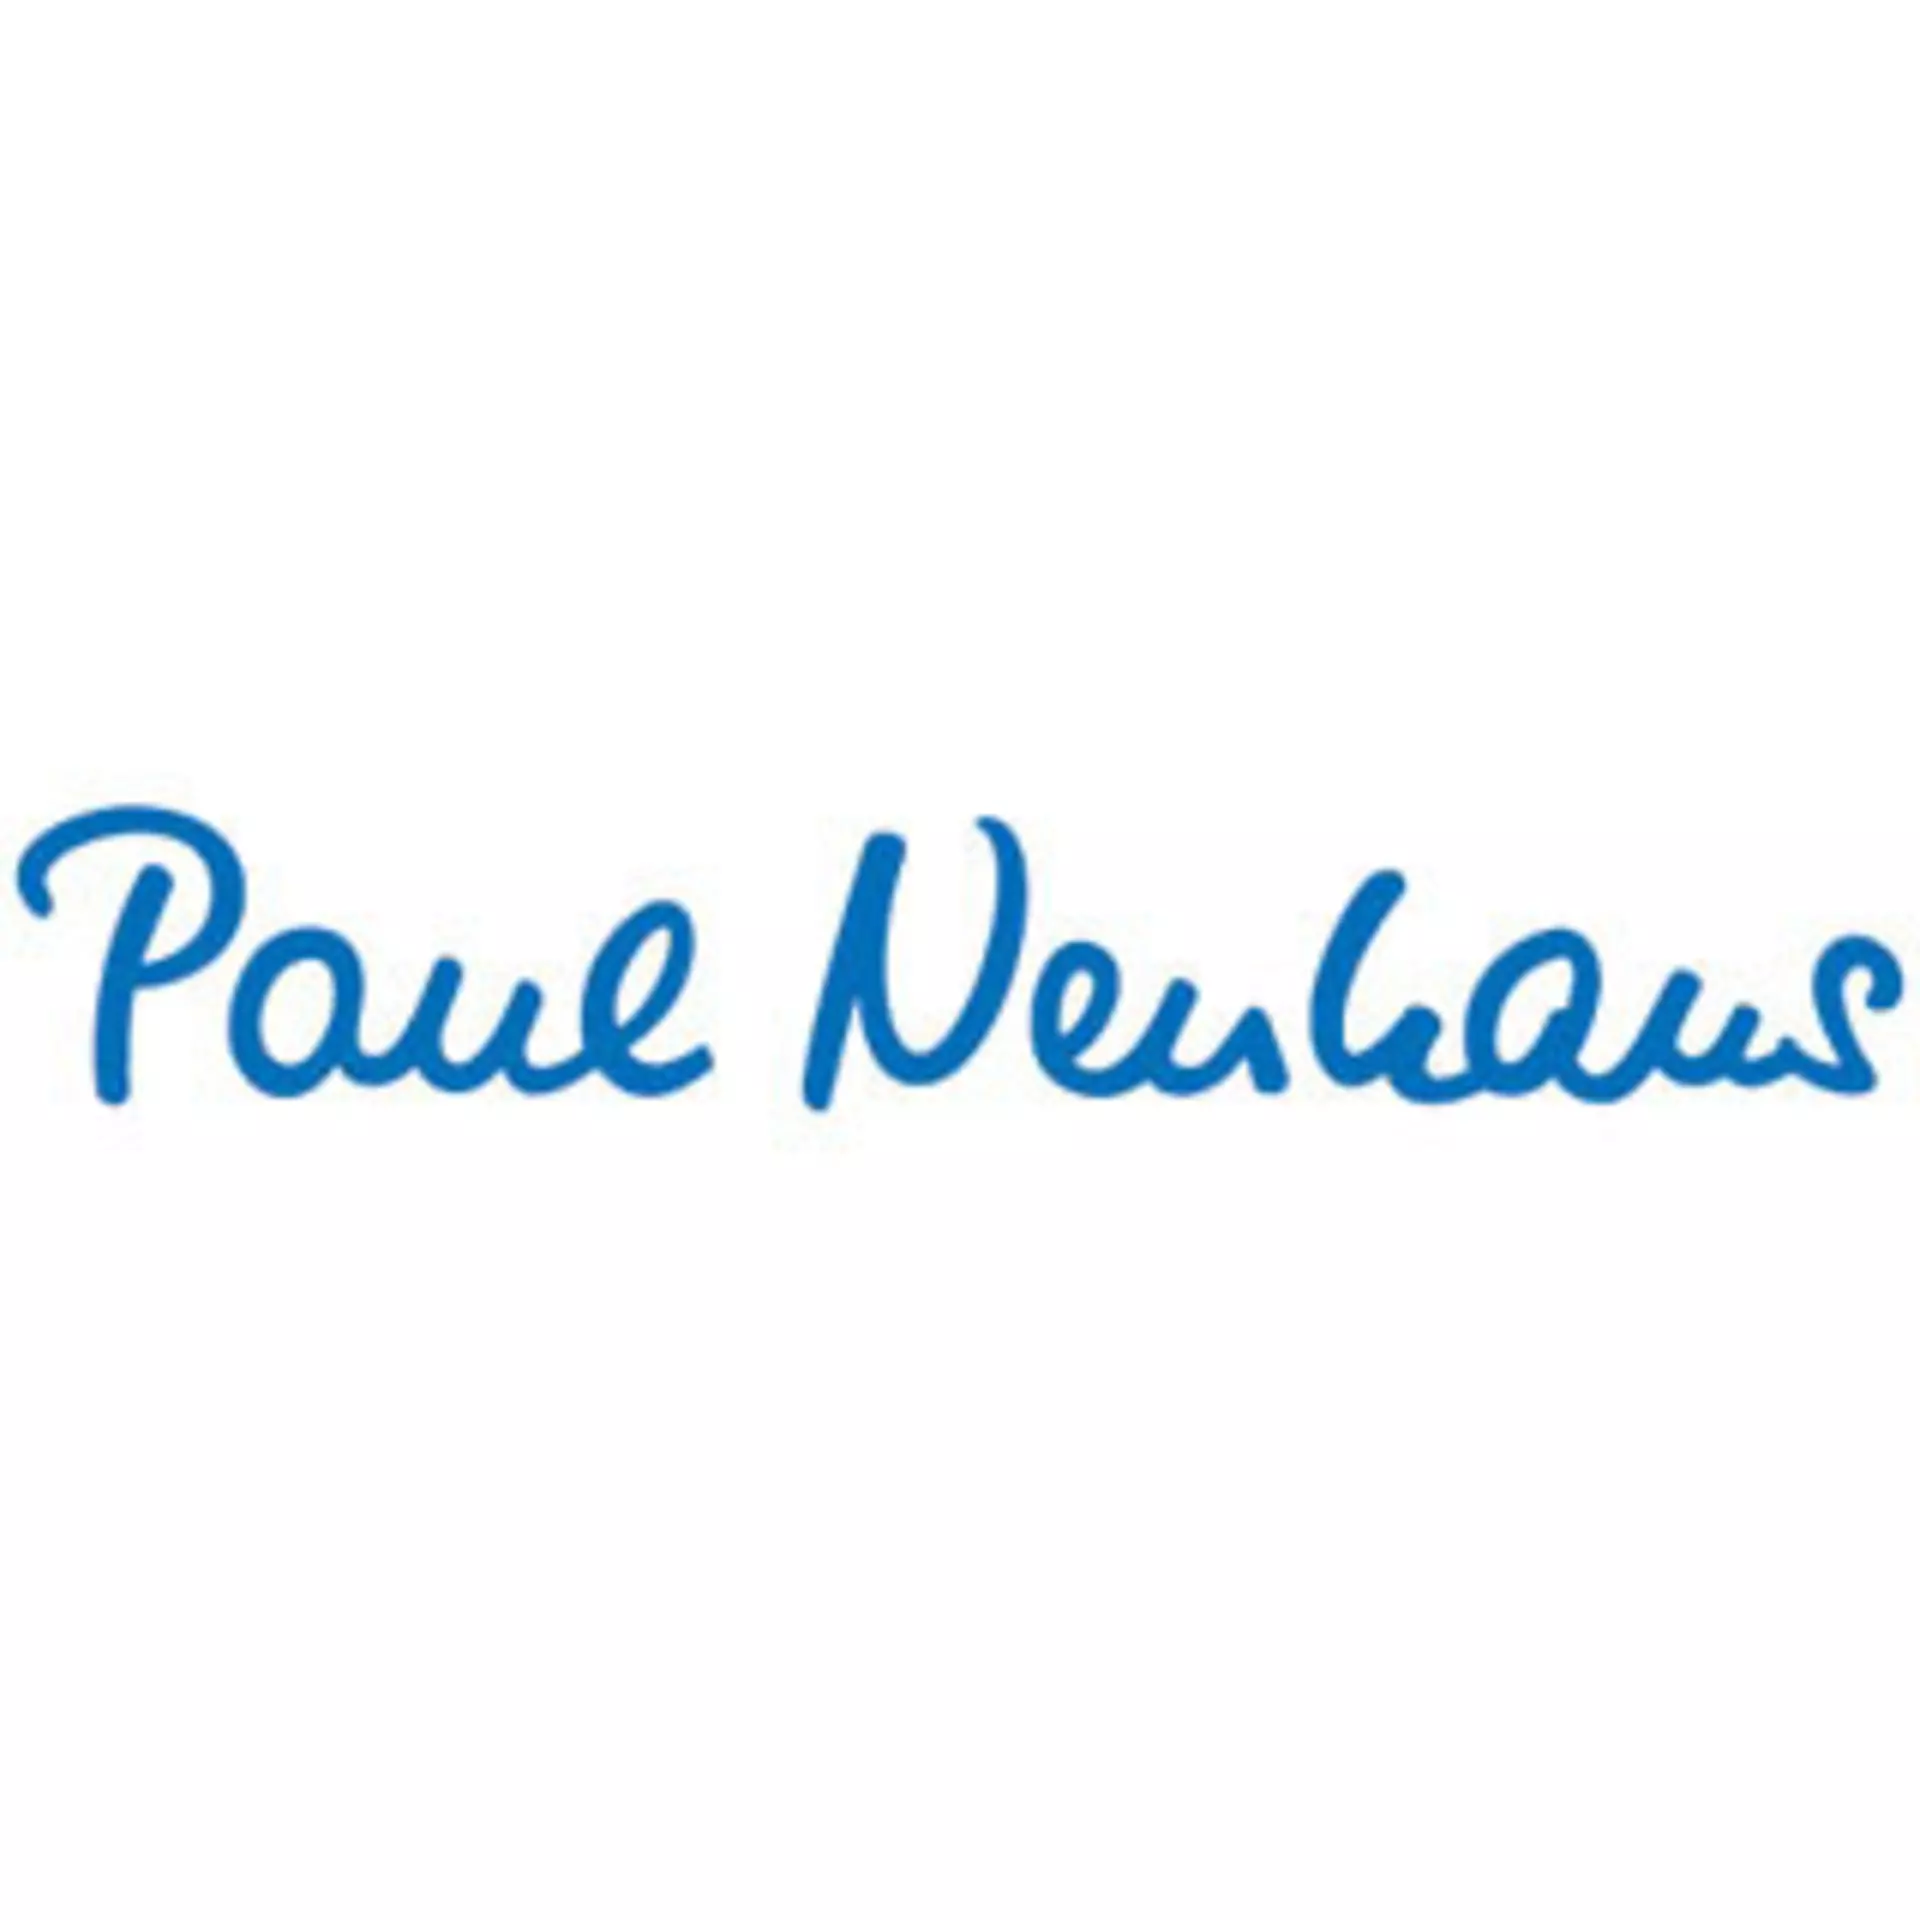 Paul Neuhaus